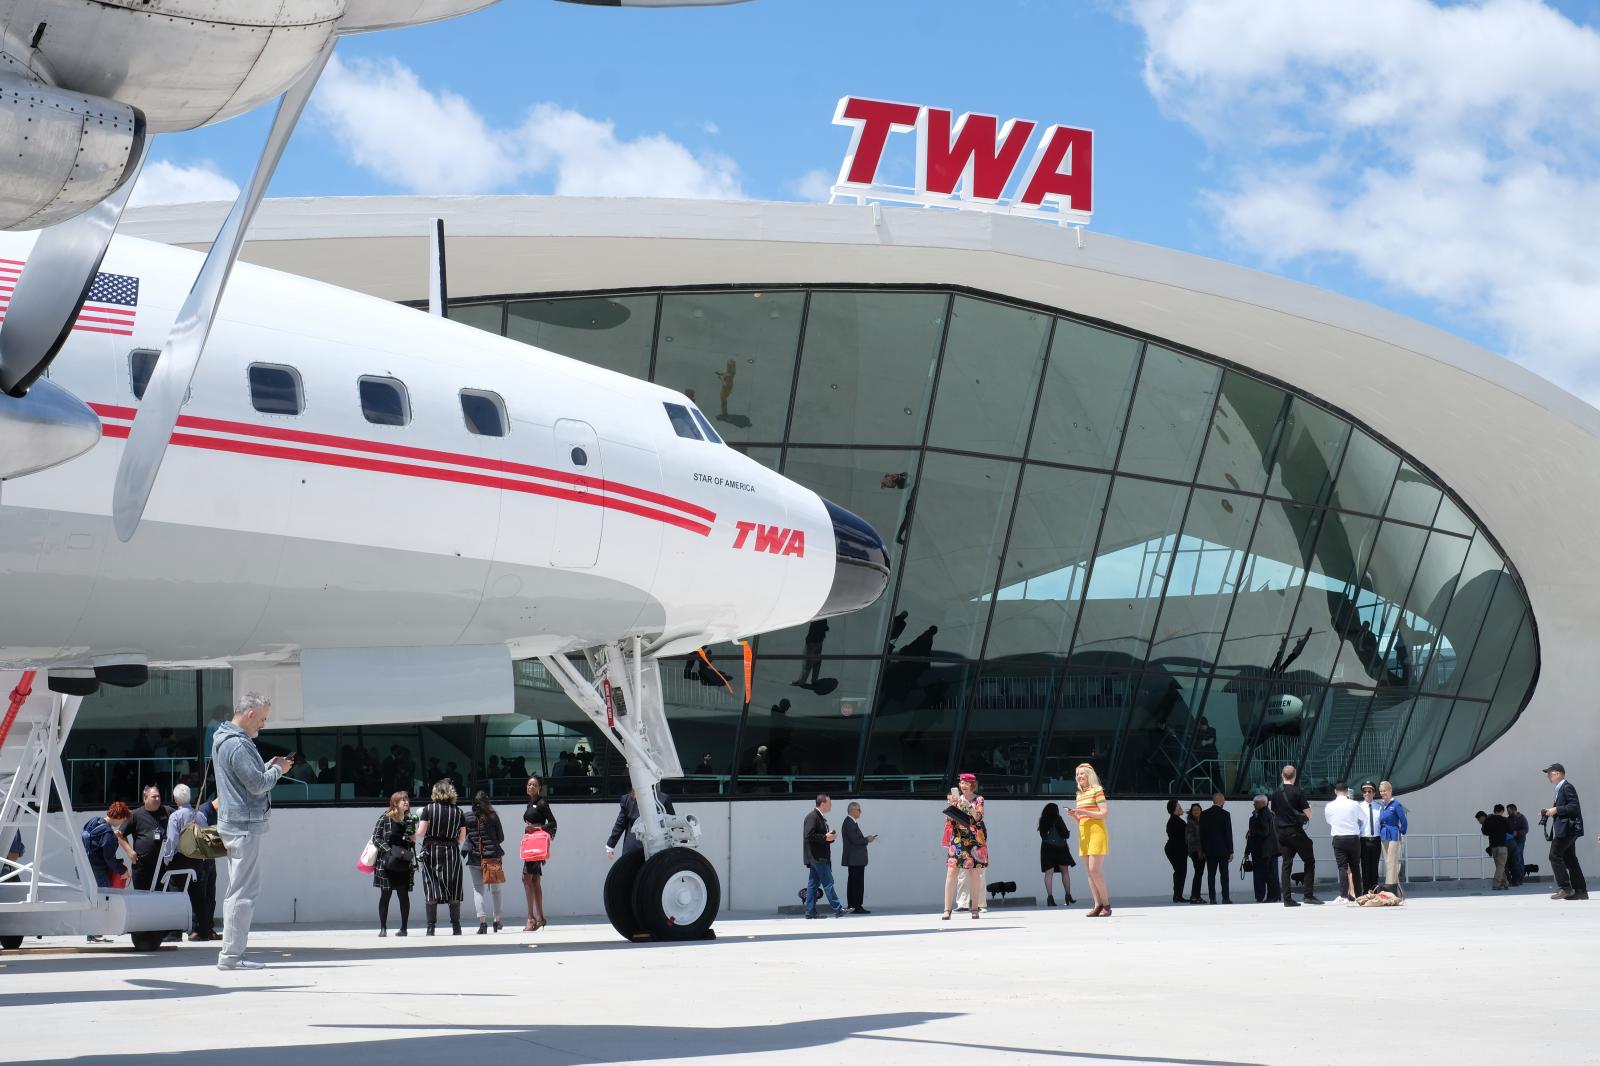 TWA Hotel opens